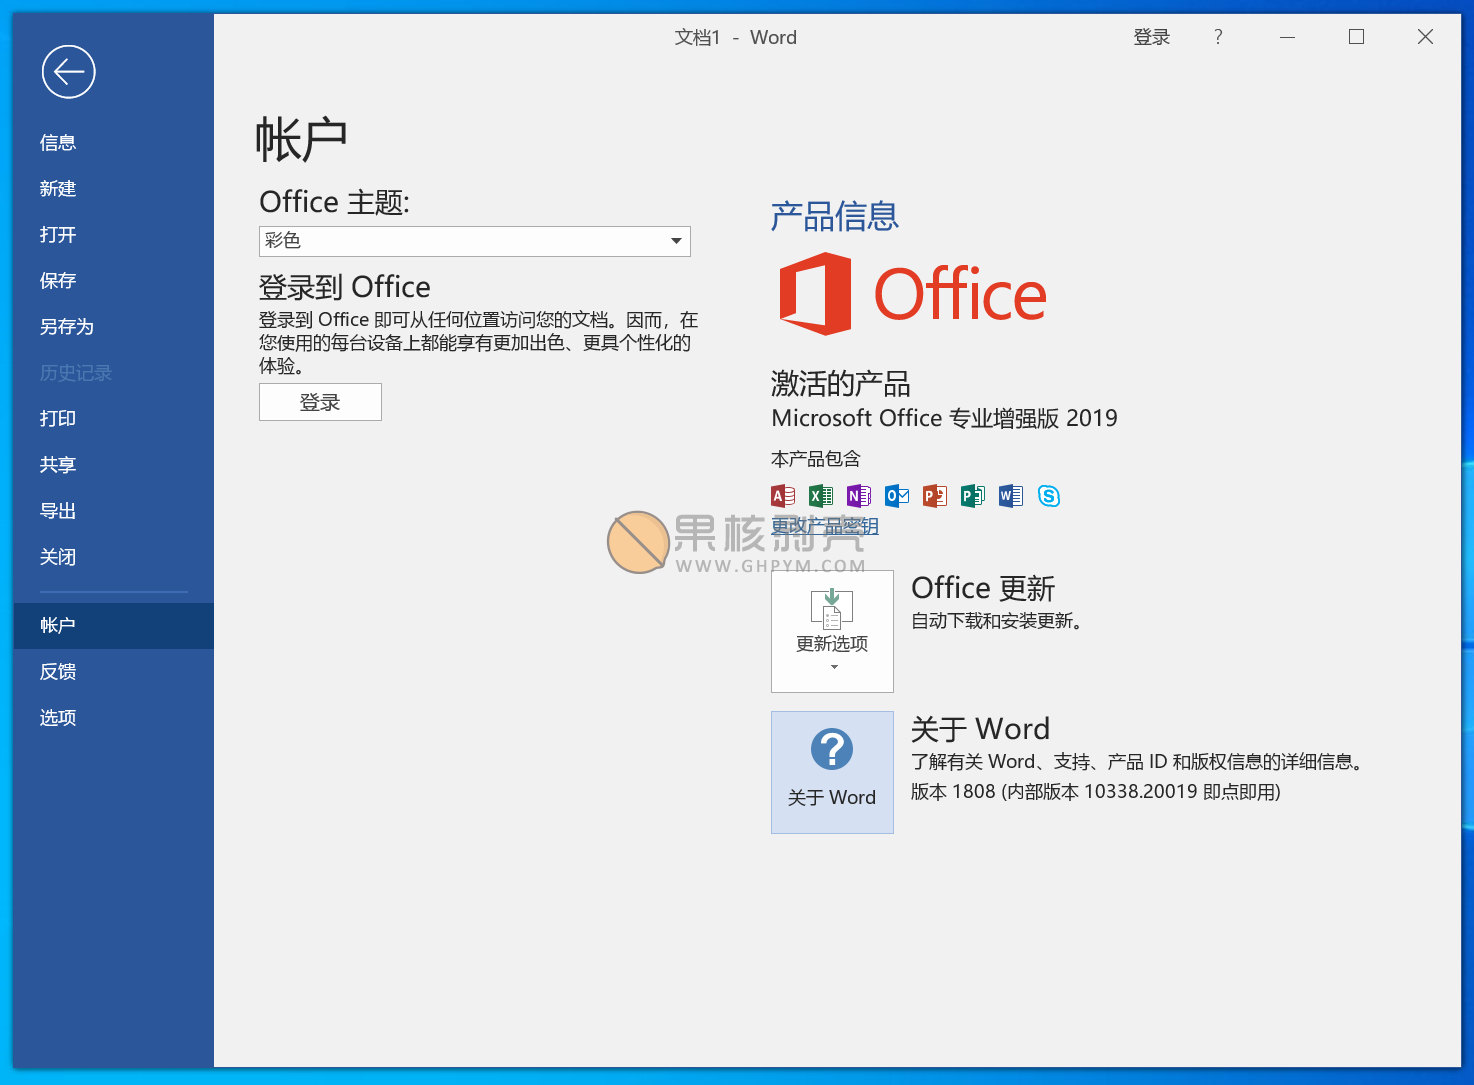 Microsoft Office 2019 2022年4月批量许可版